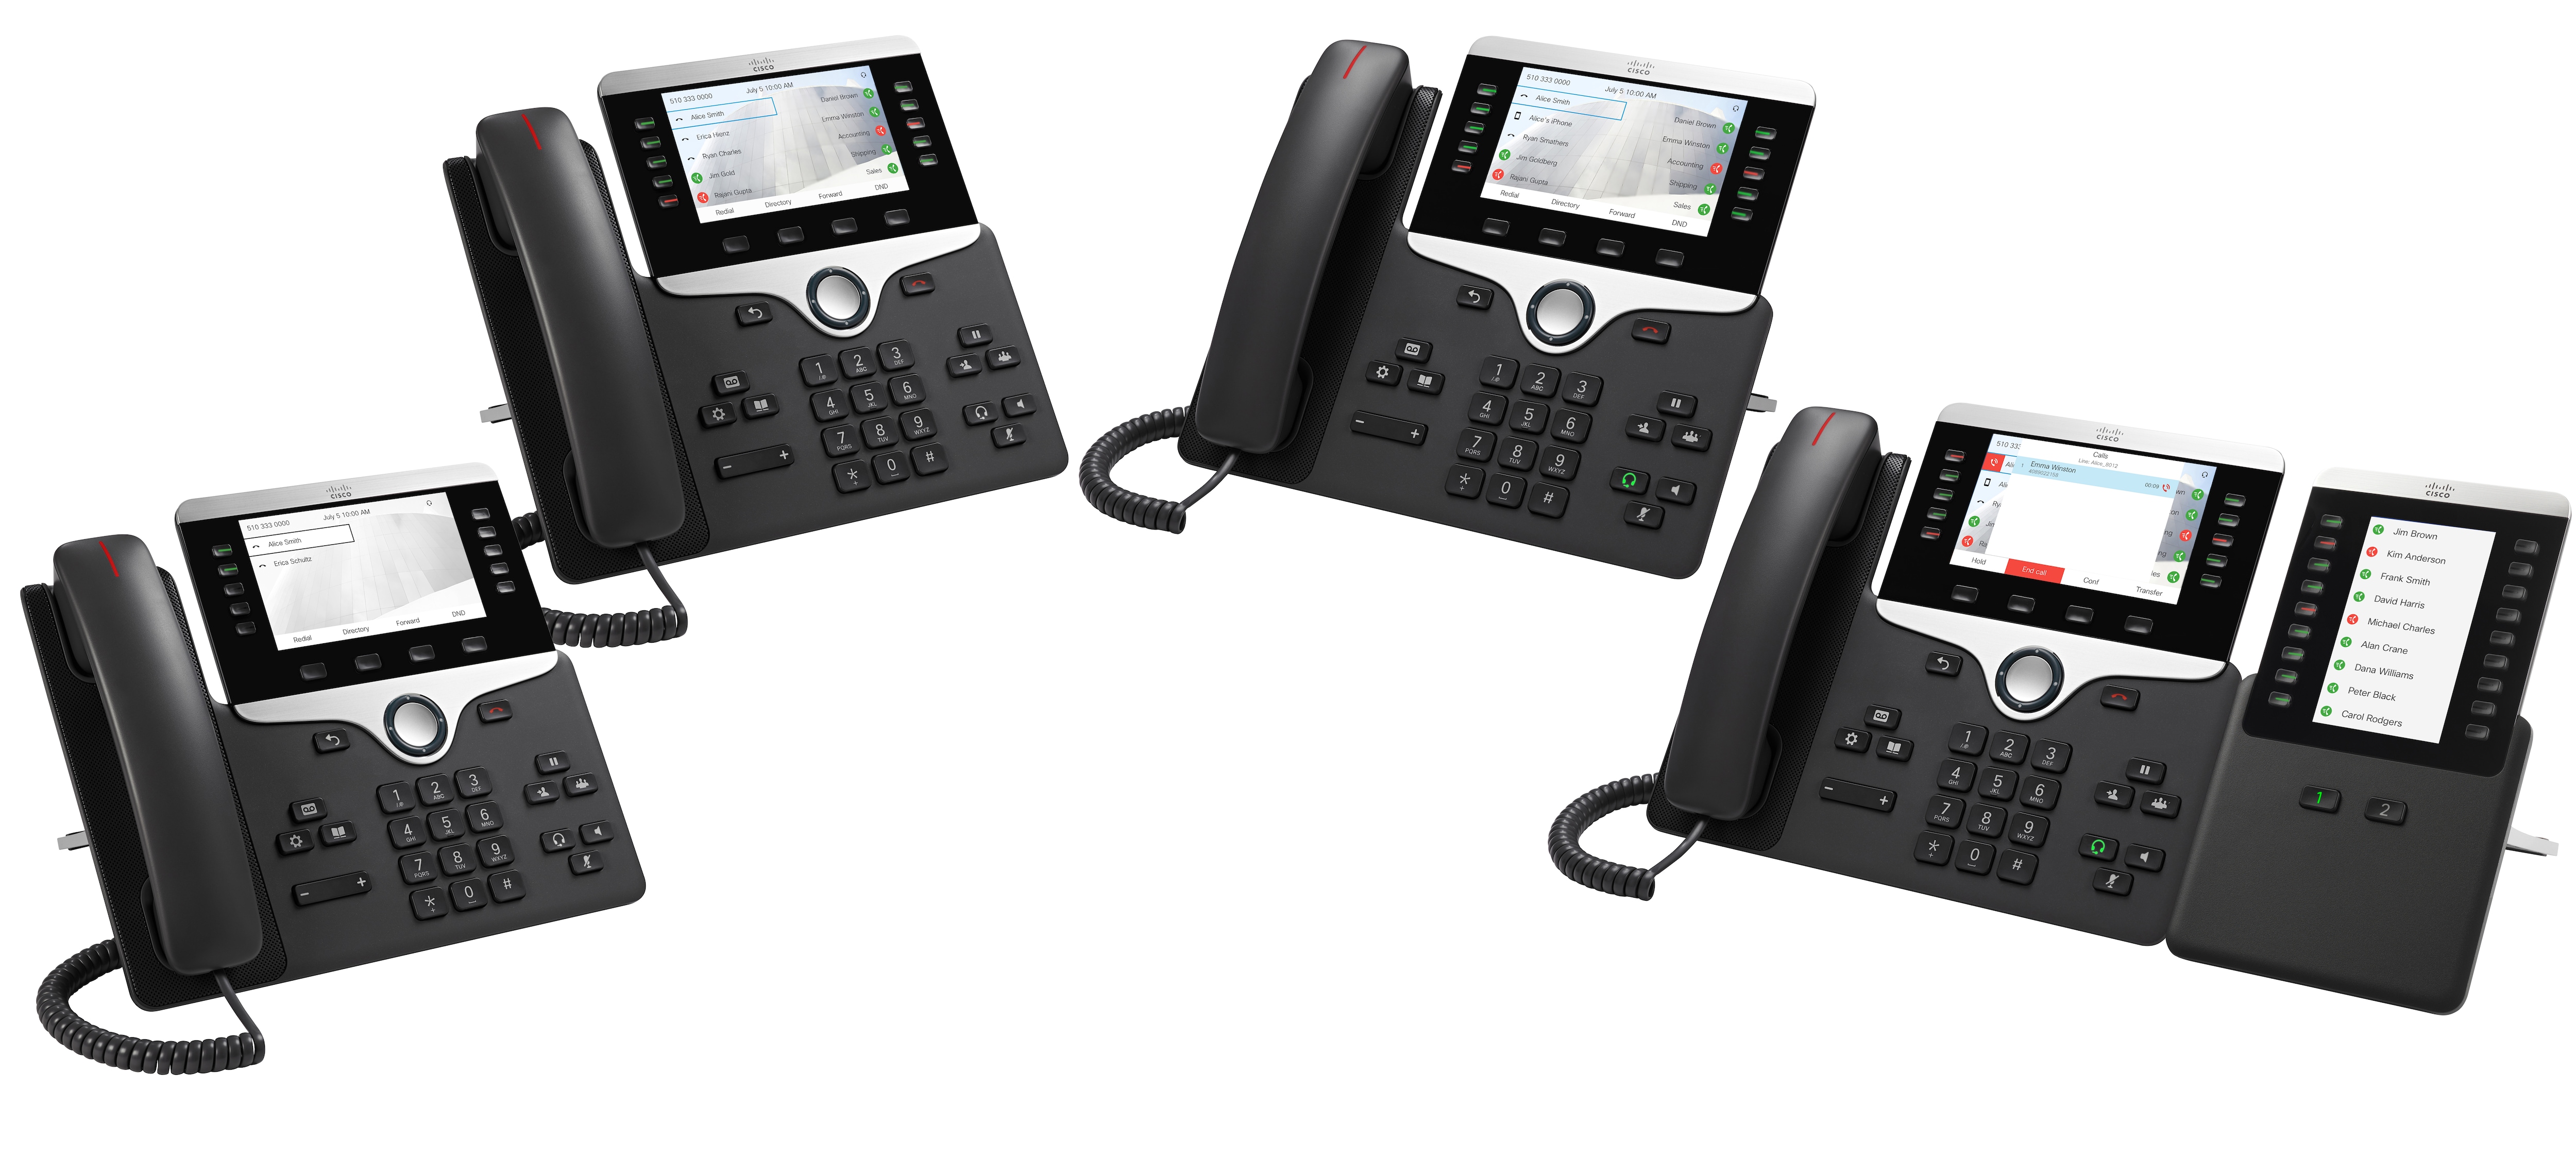 Cisco IP Phone 8800 Series Multiplatform Phones User Guide for Firmware